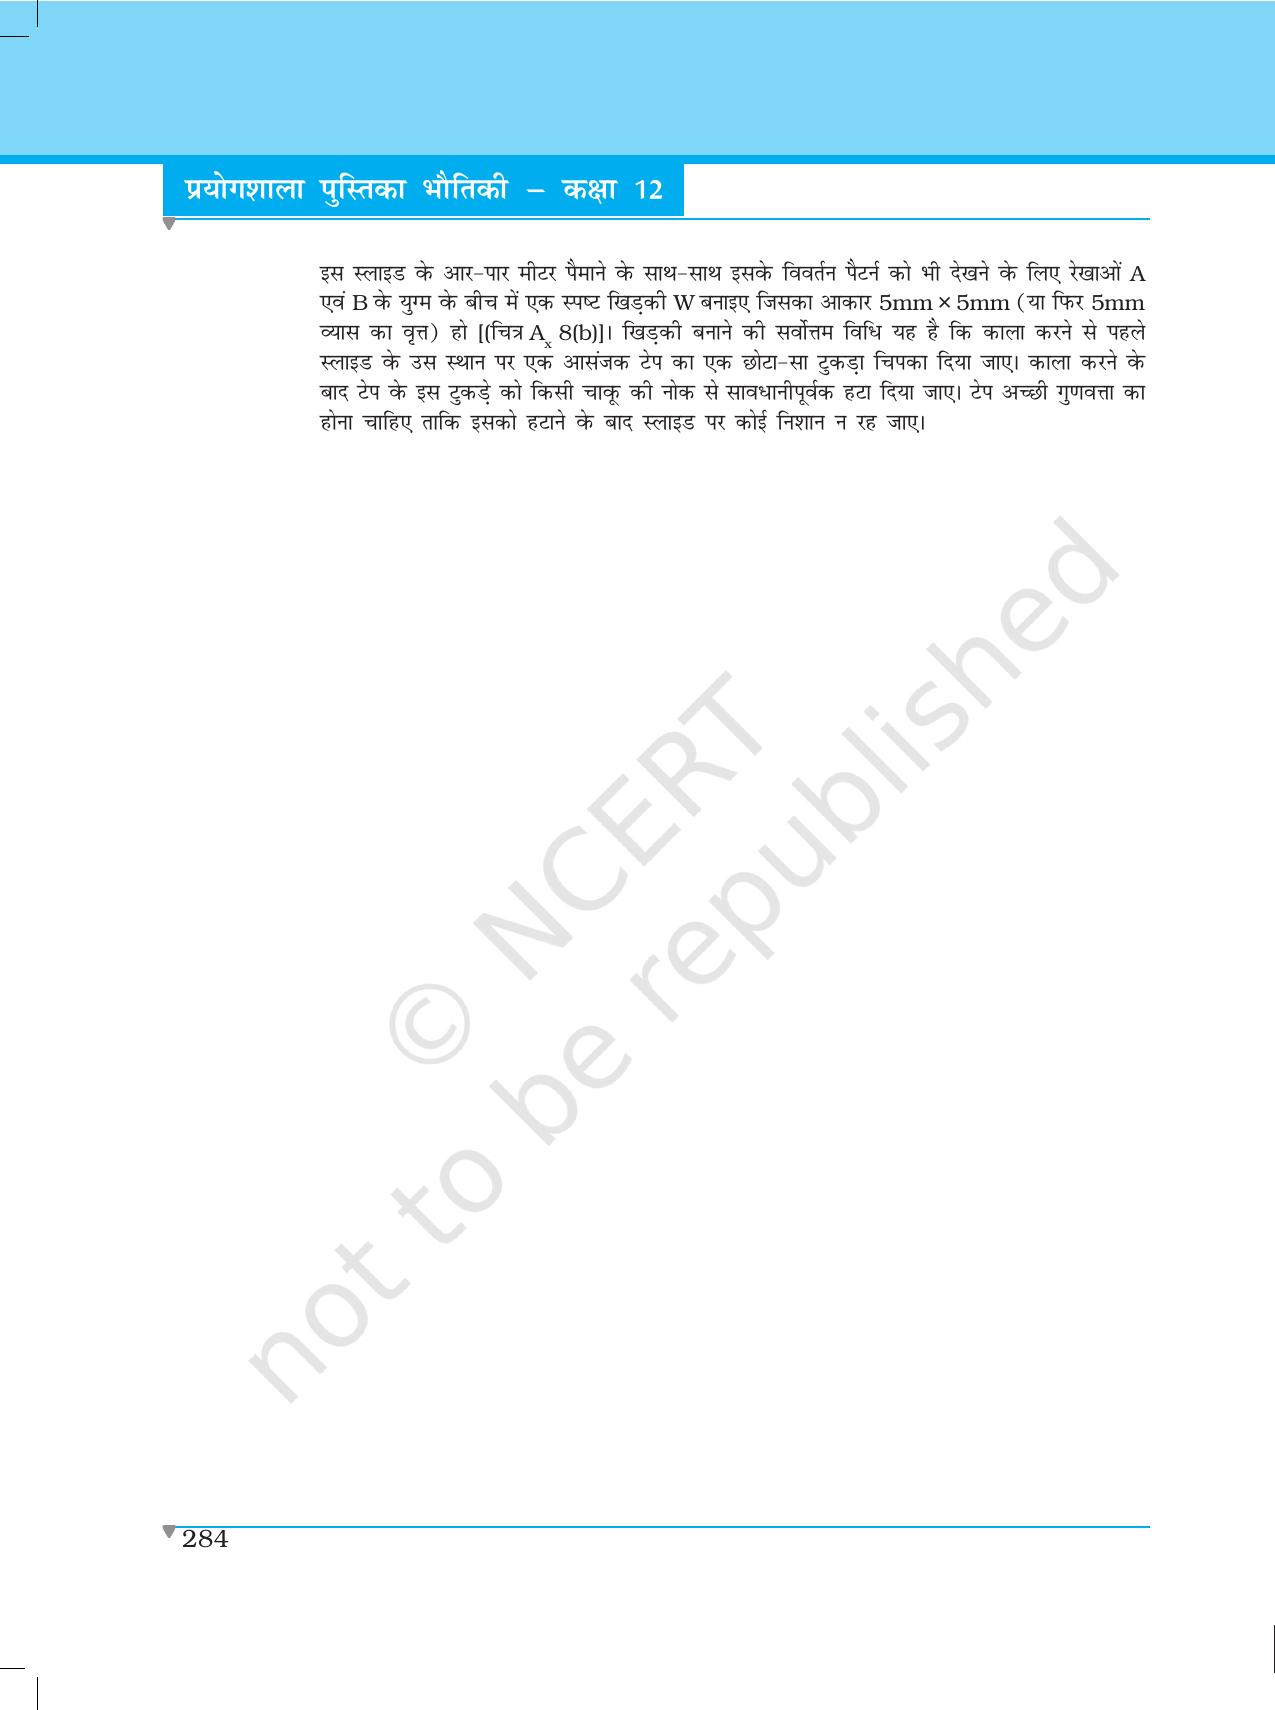 NCERT Laboratory Manuals for Class XII भौतिकी - परिशिष्ट - Page 13